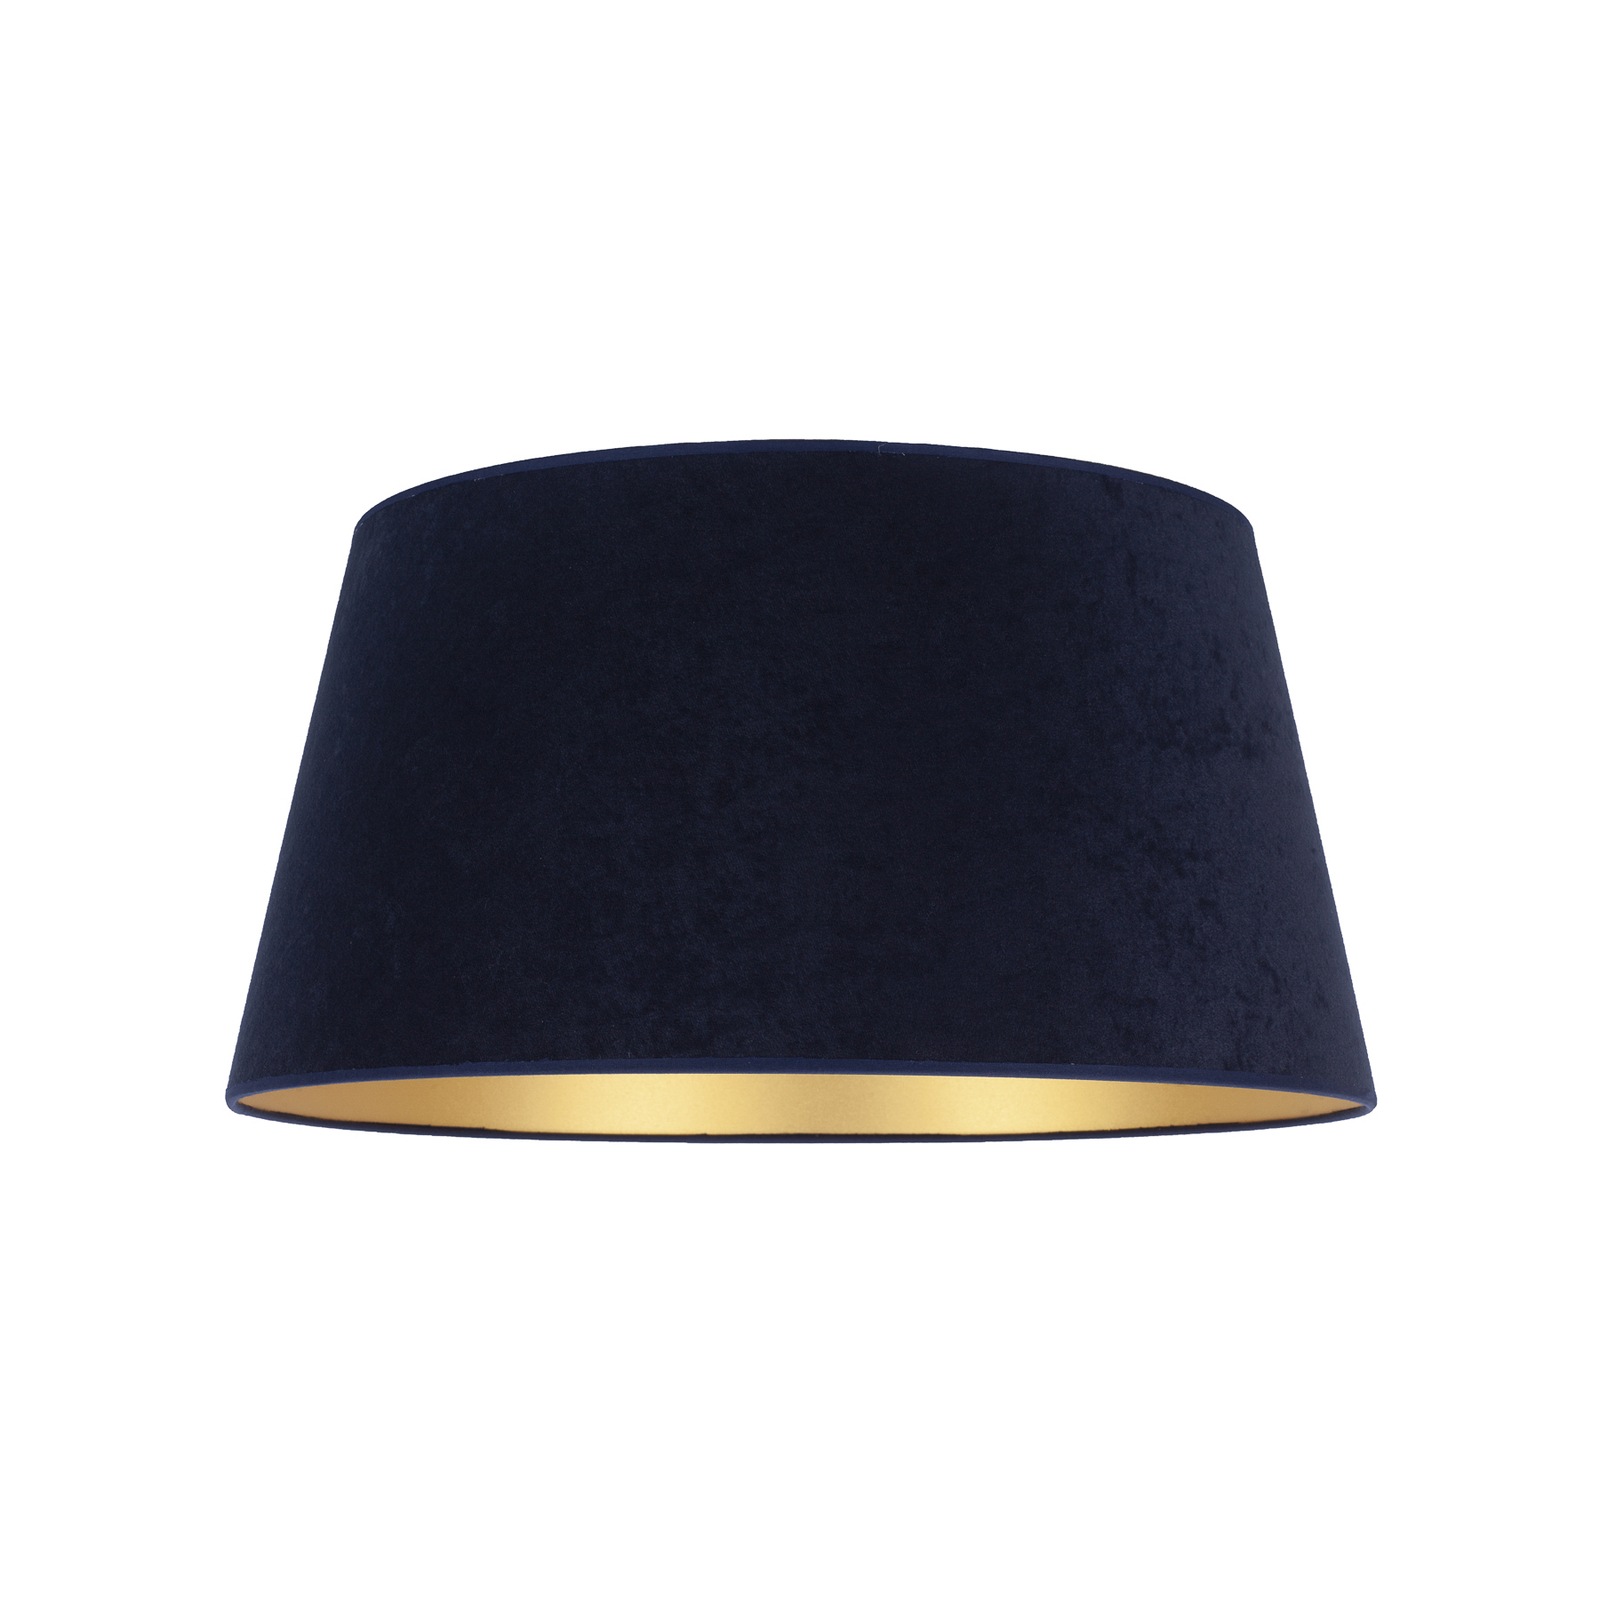 Cone lampshade height 25.5 cm, dark blue/gold